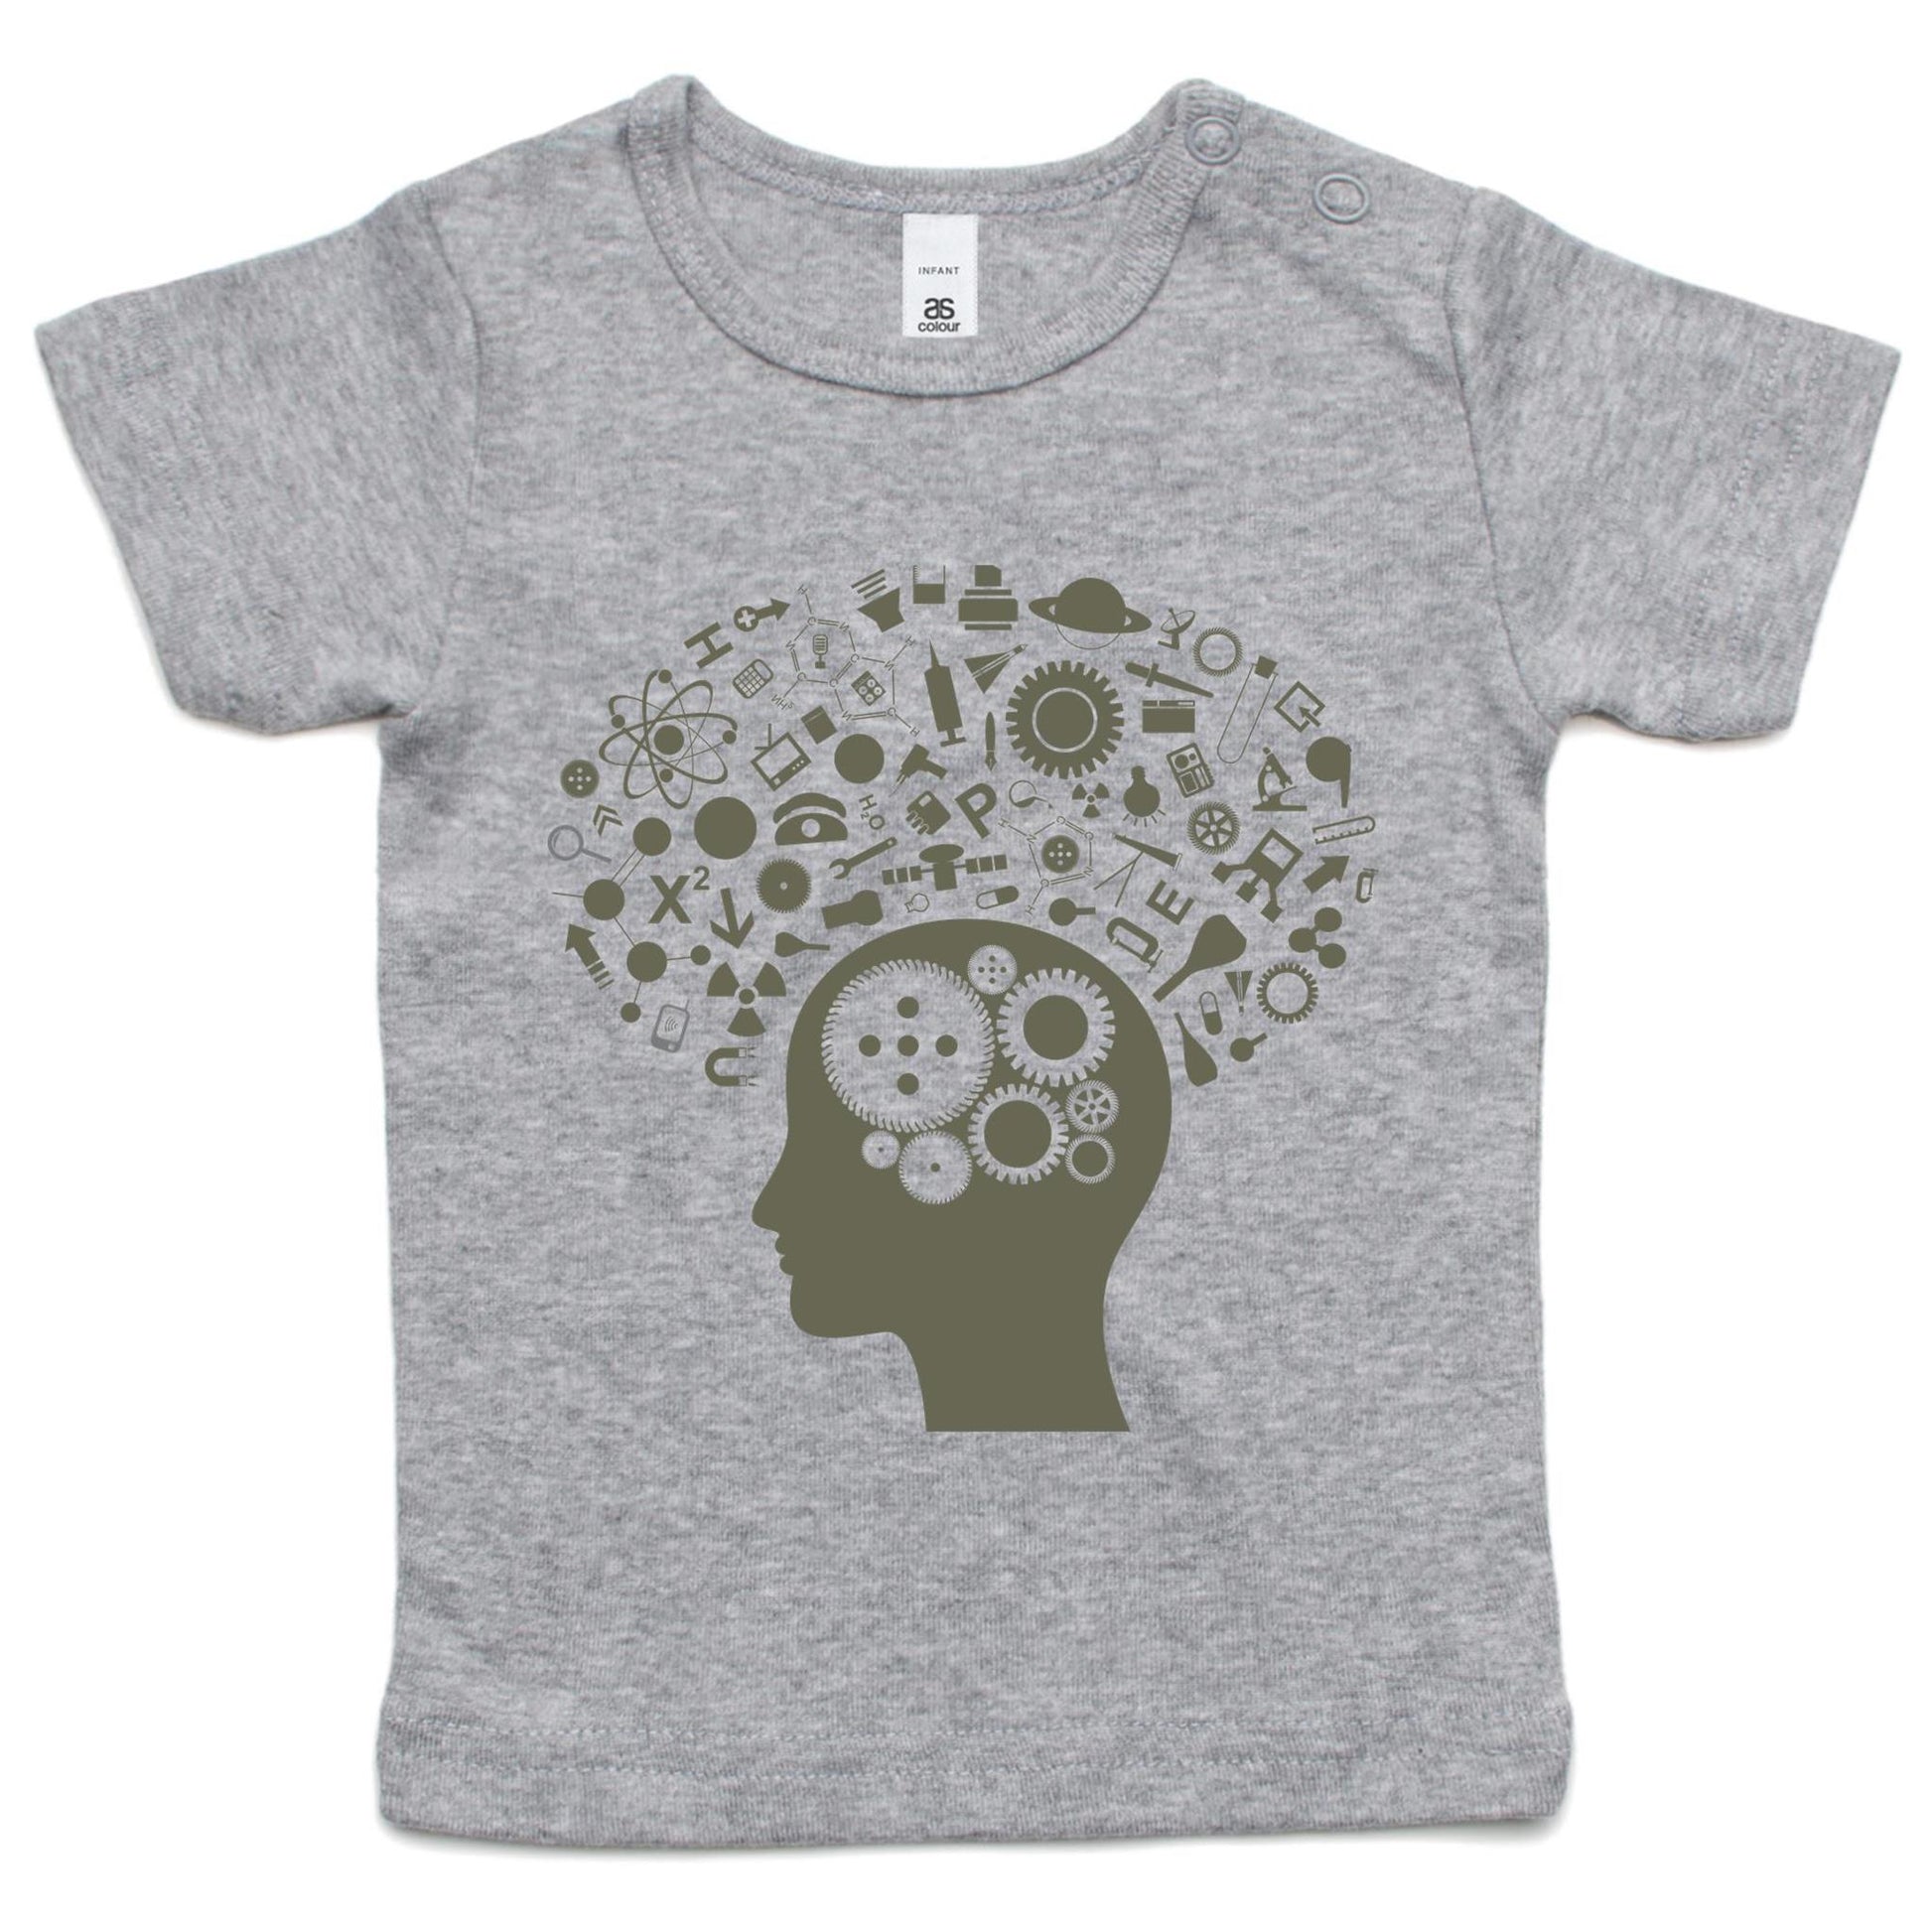 Science Brain - Baby T-shirt Grey Marle Baby T-shirt kids Science